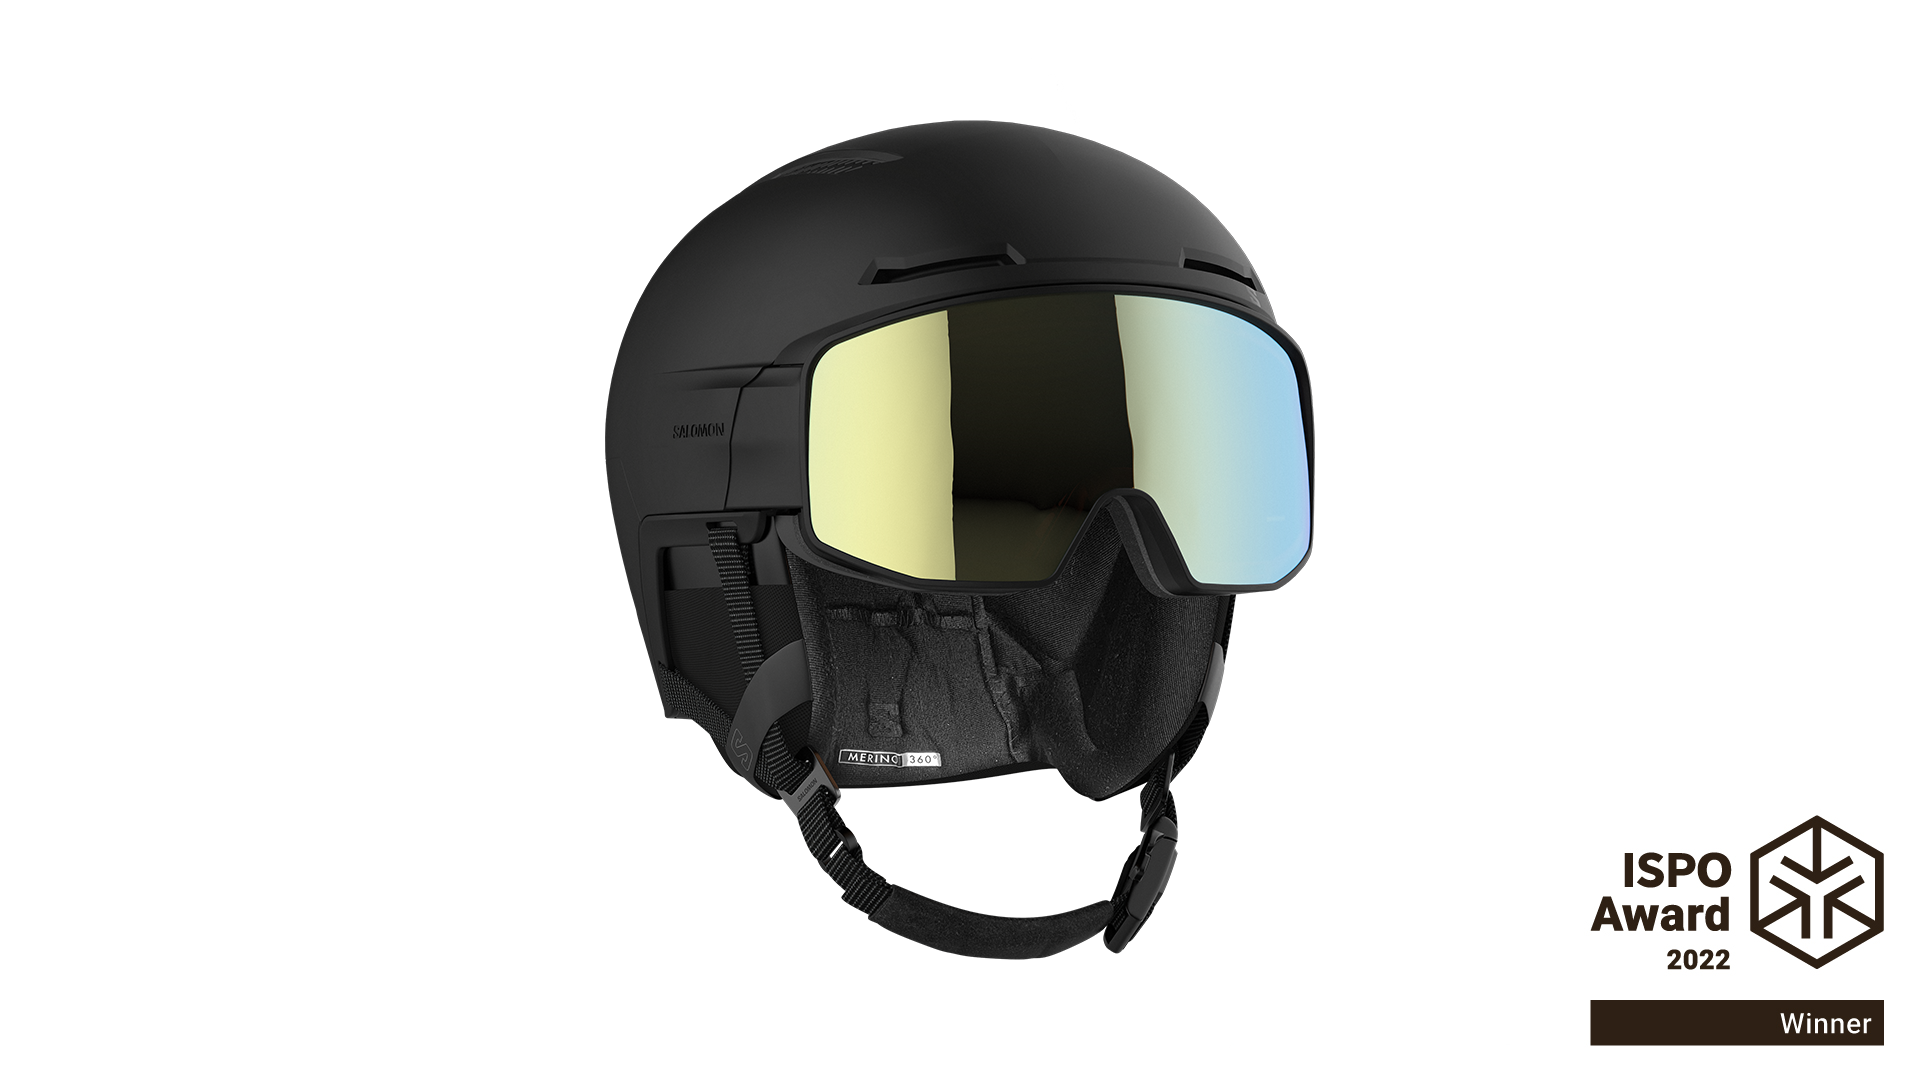 ISPO Award 2022 Winner: Salomon Driver Ski Helmet